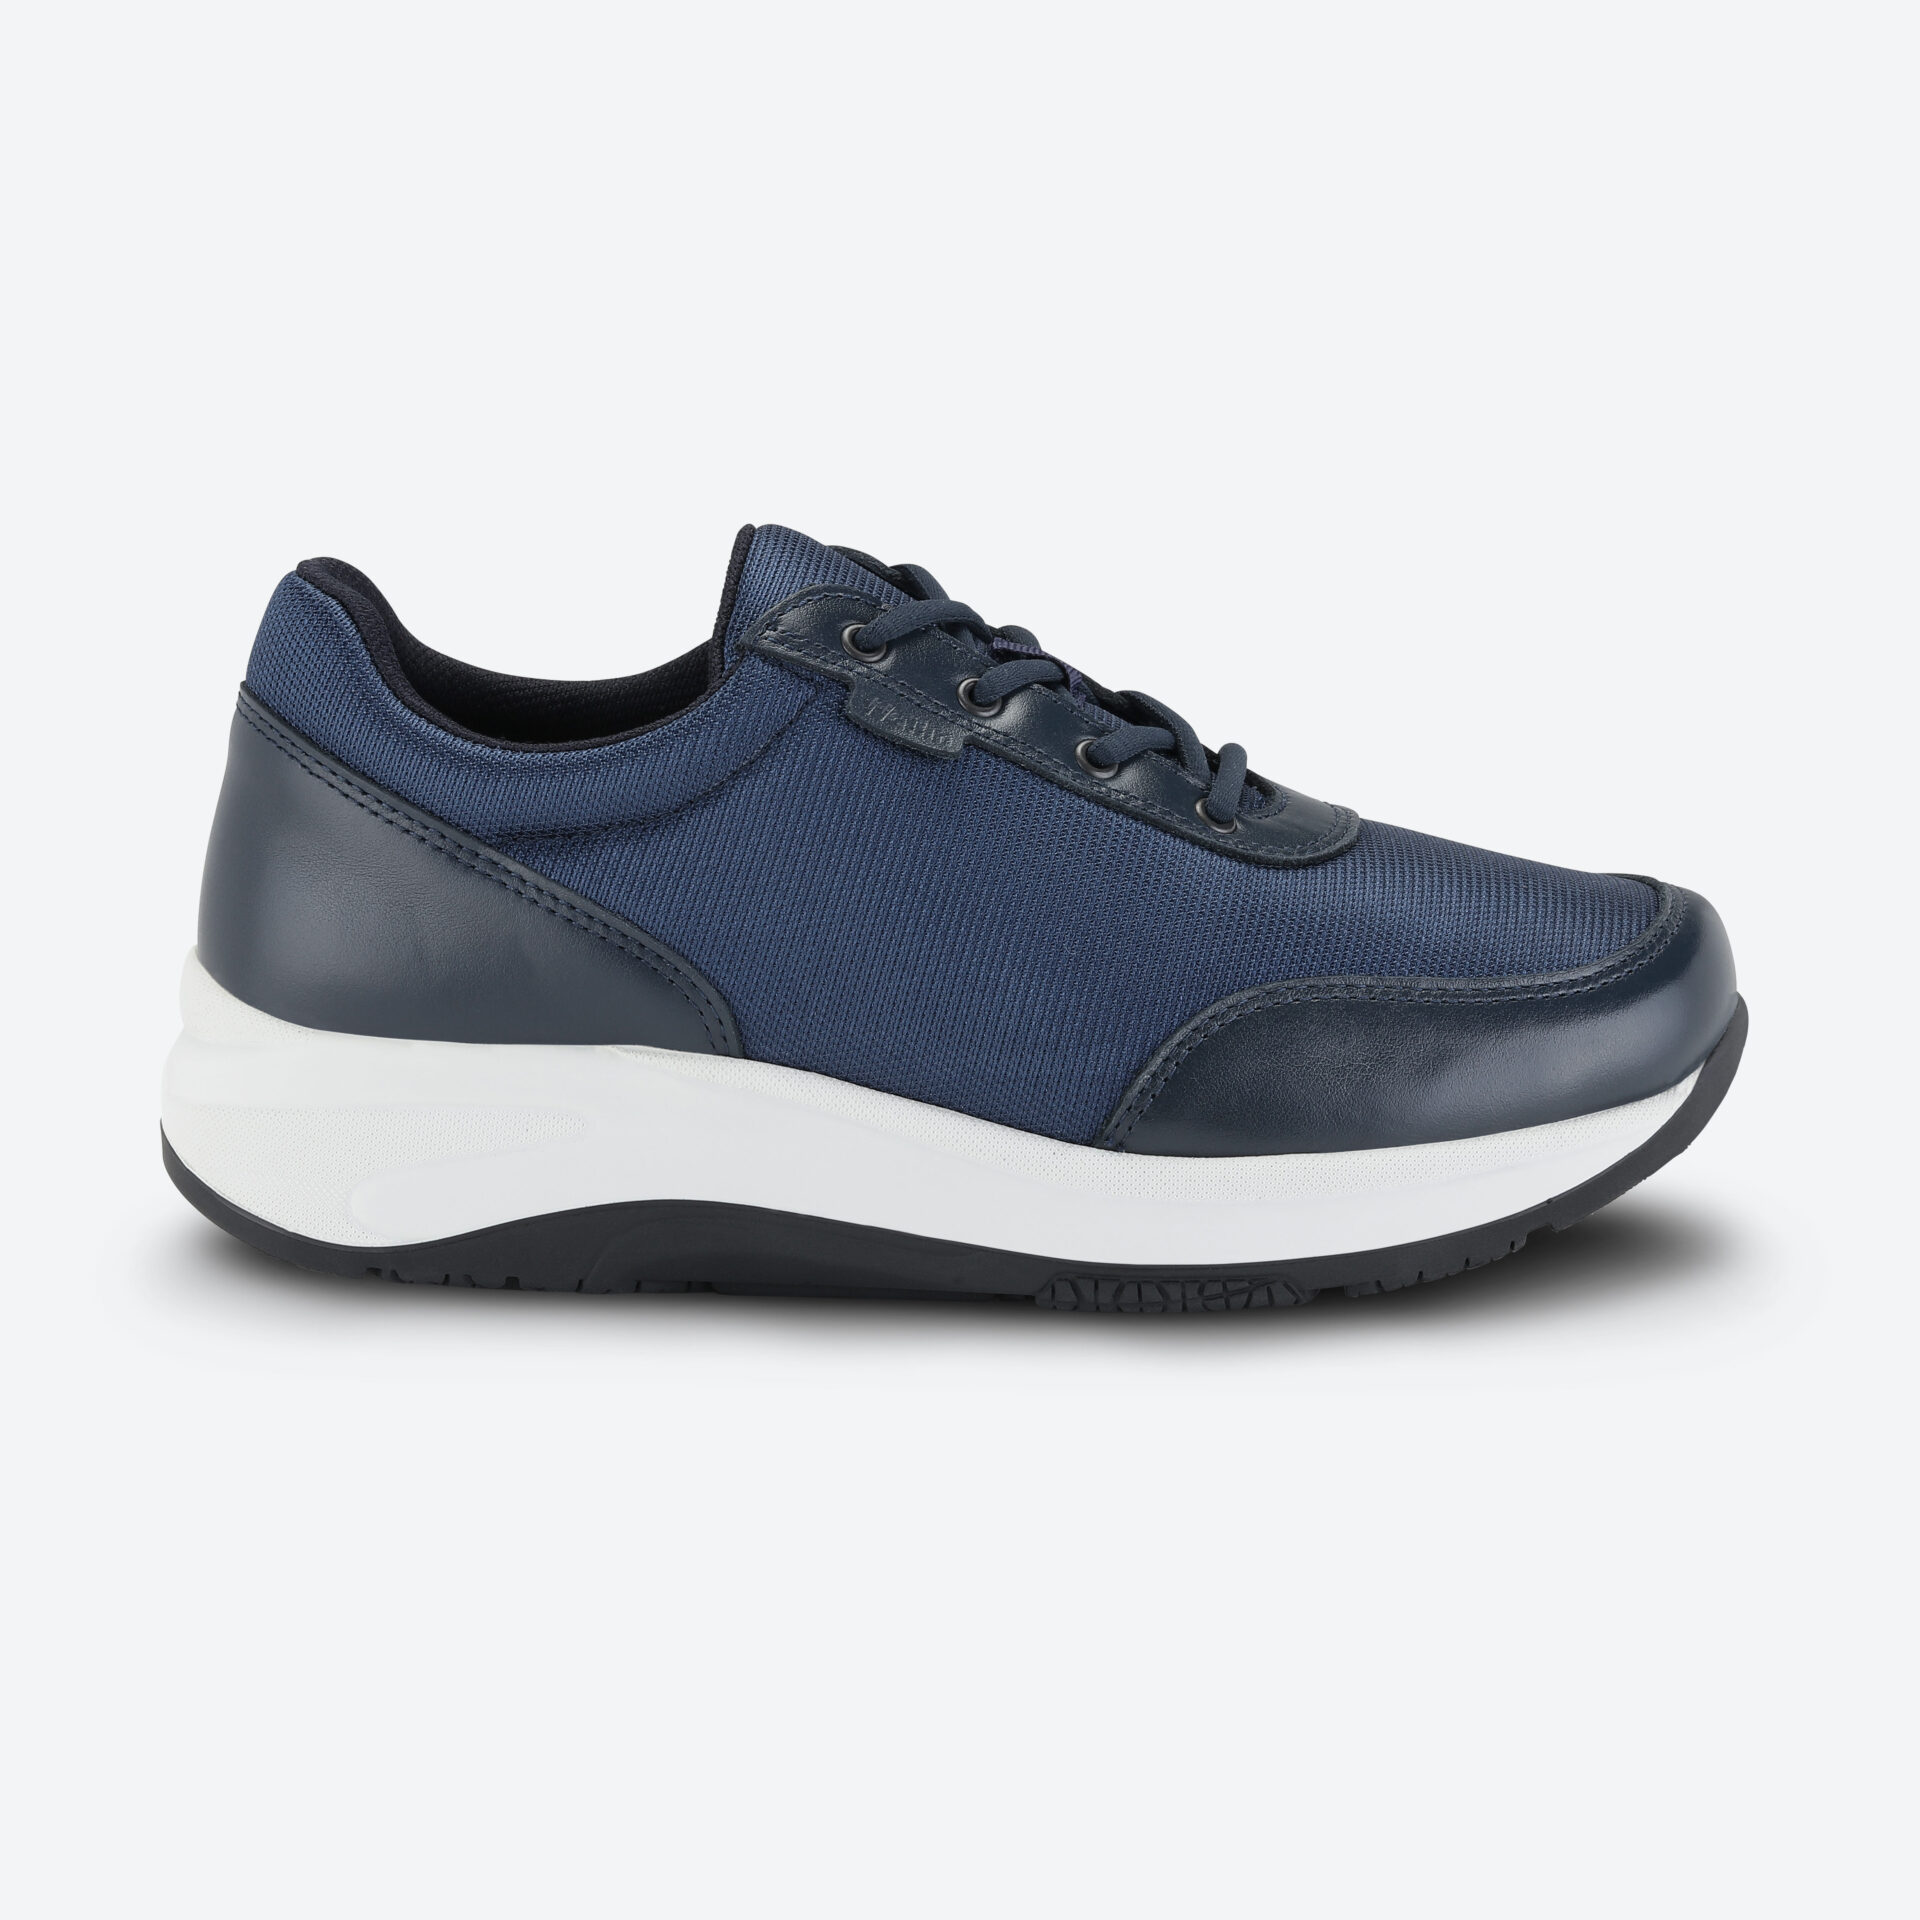 EMMA - LACE MESH/FULLGRAIN NAVY - 1305-3308 - Wallin Shoes